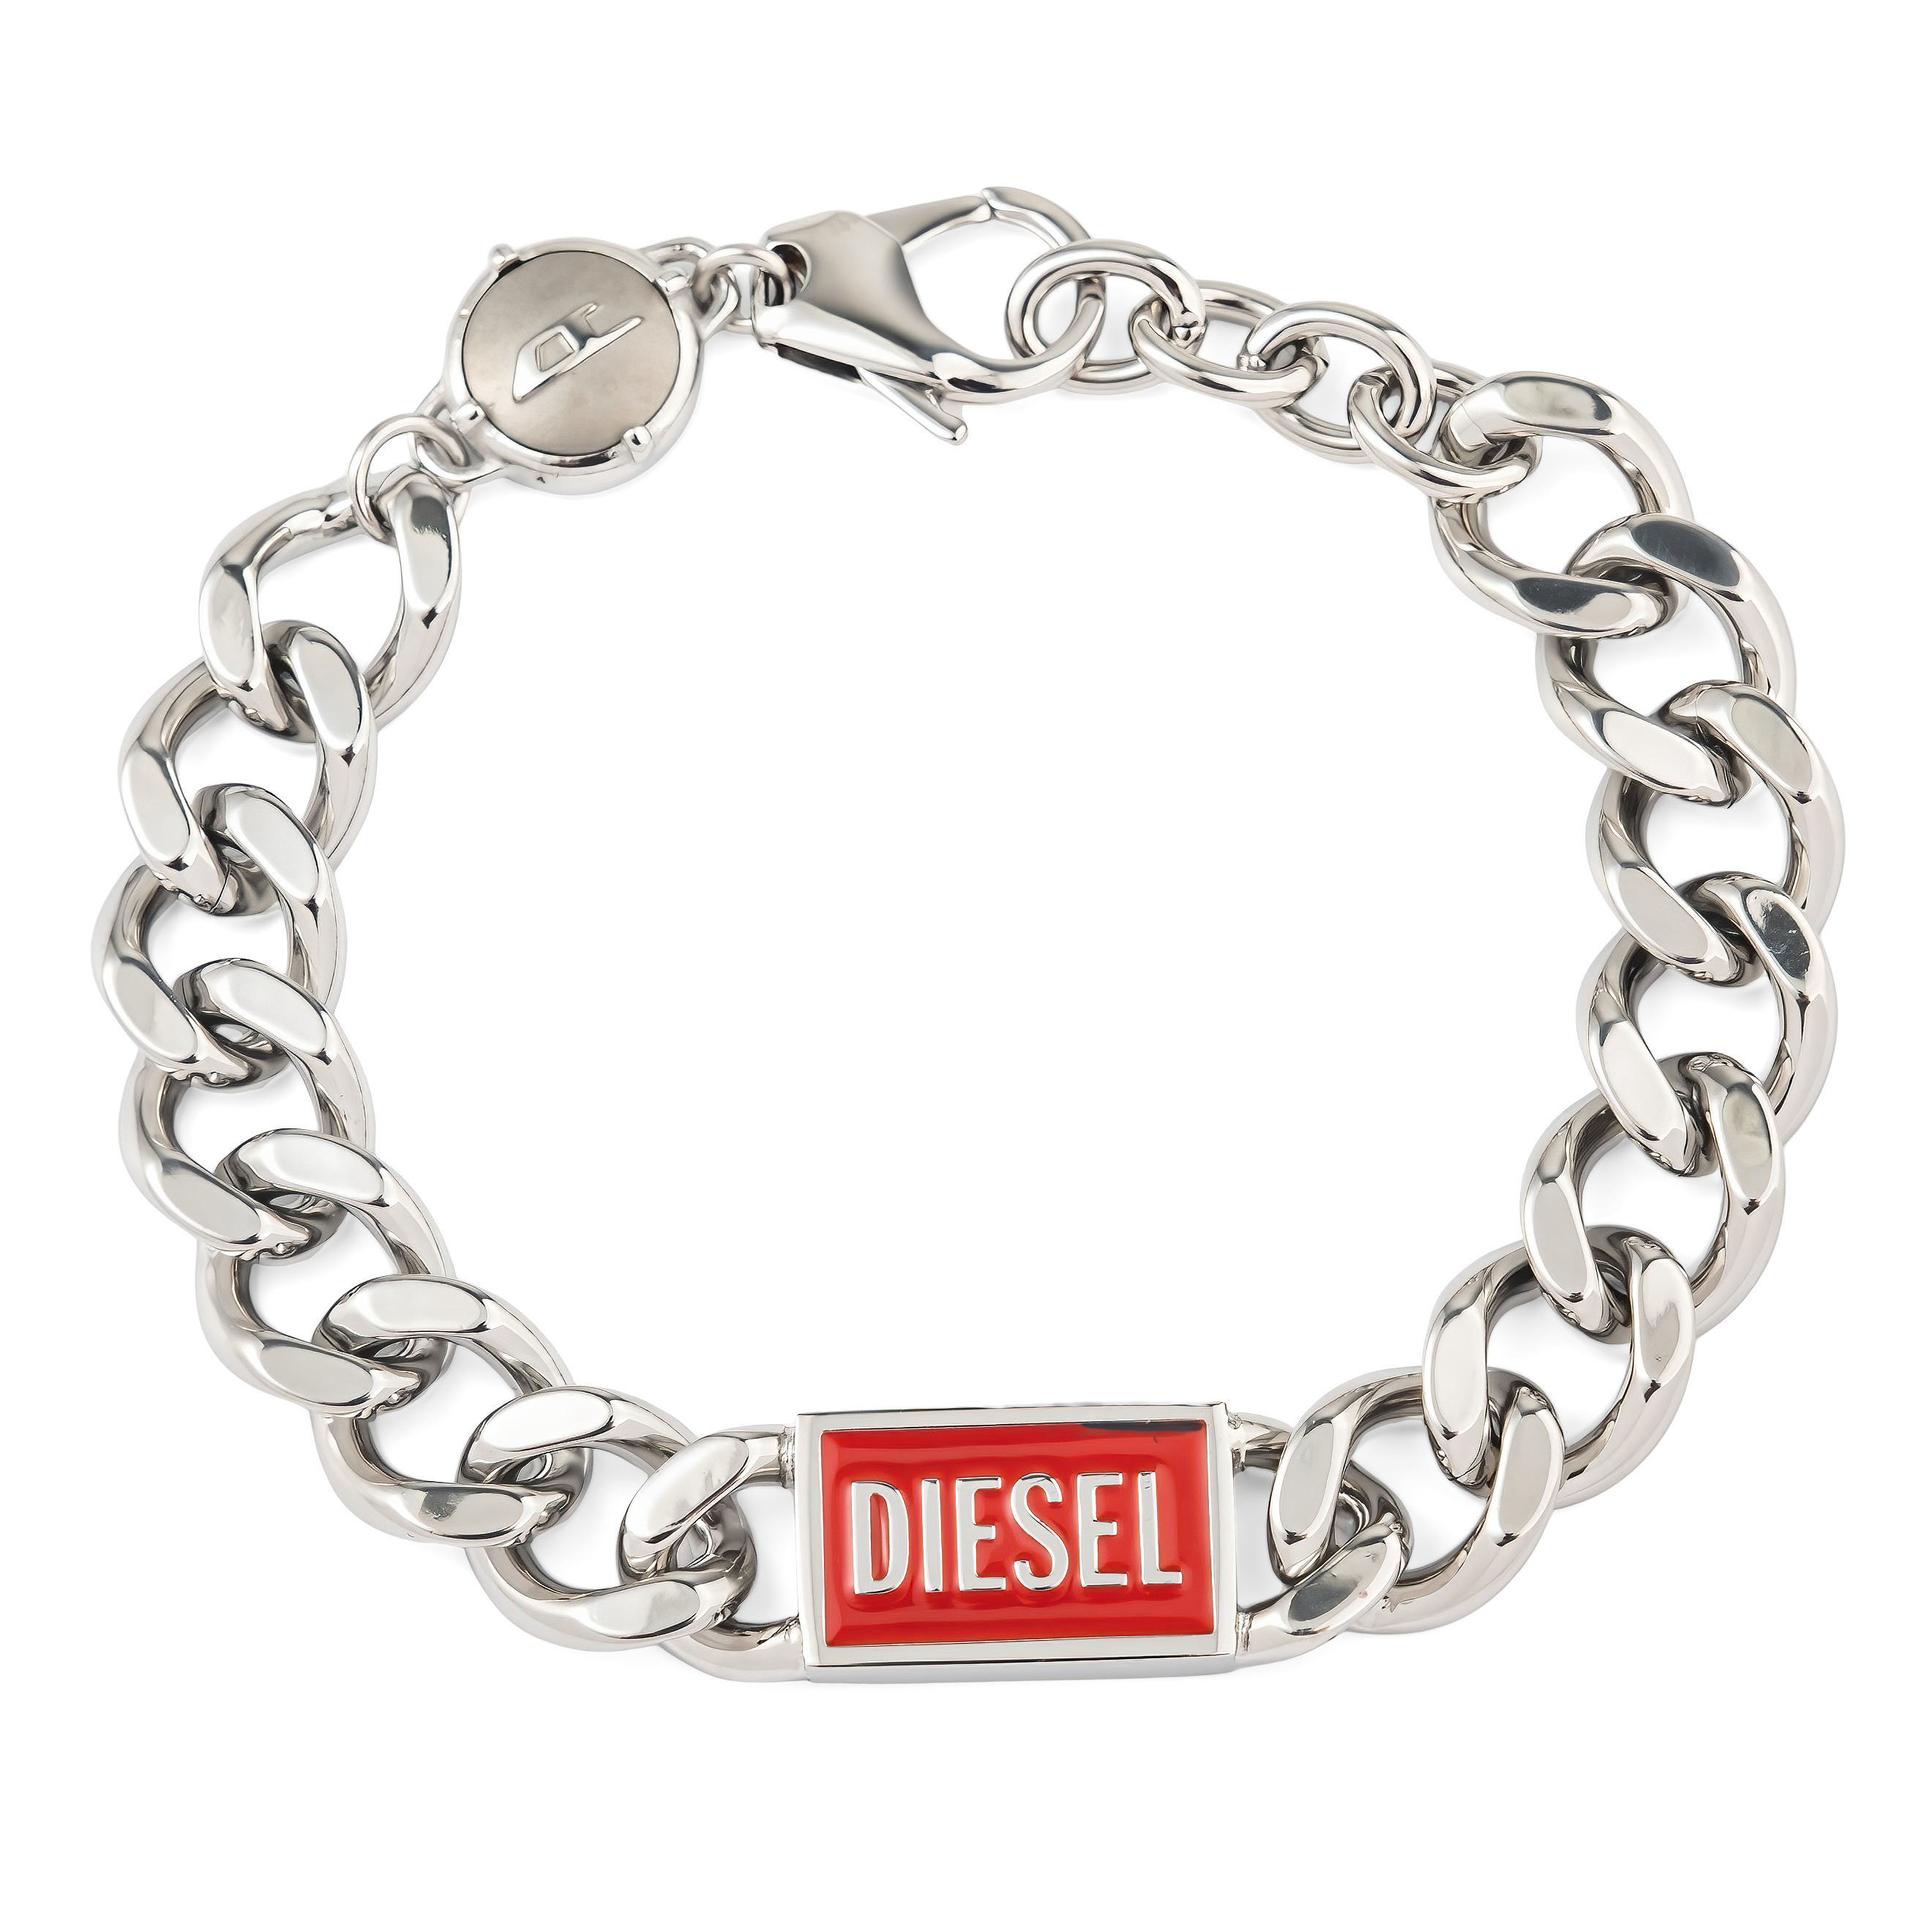 Diesel Chain Bracelet – buy at Poison Drop online store, SKU